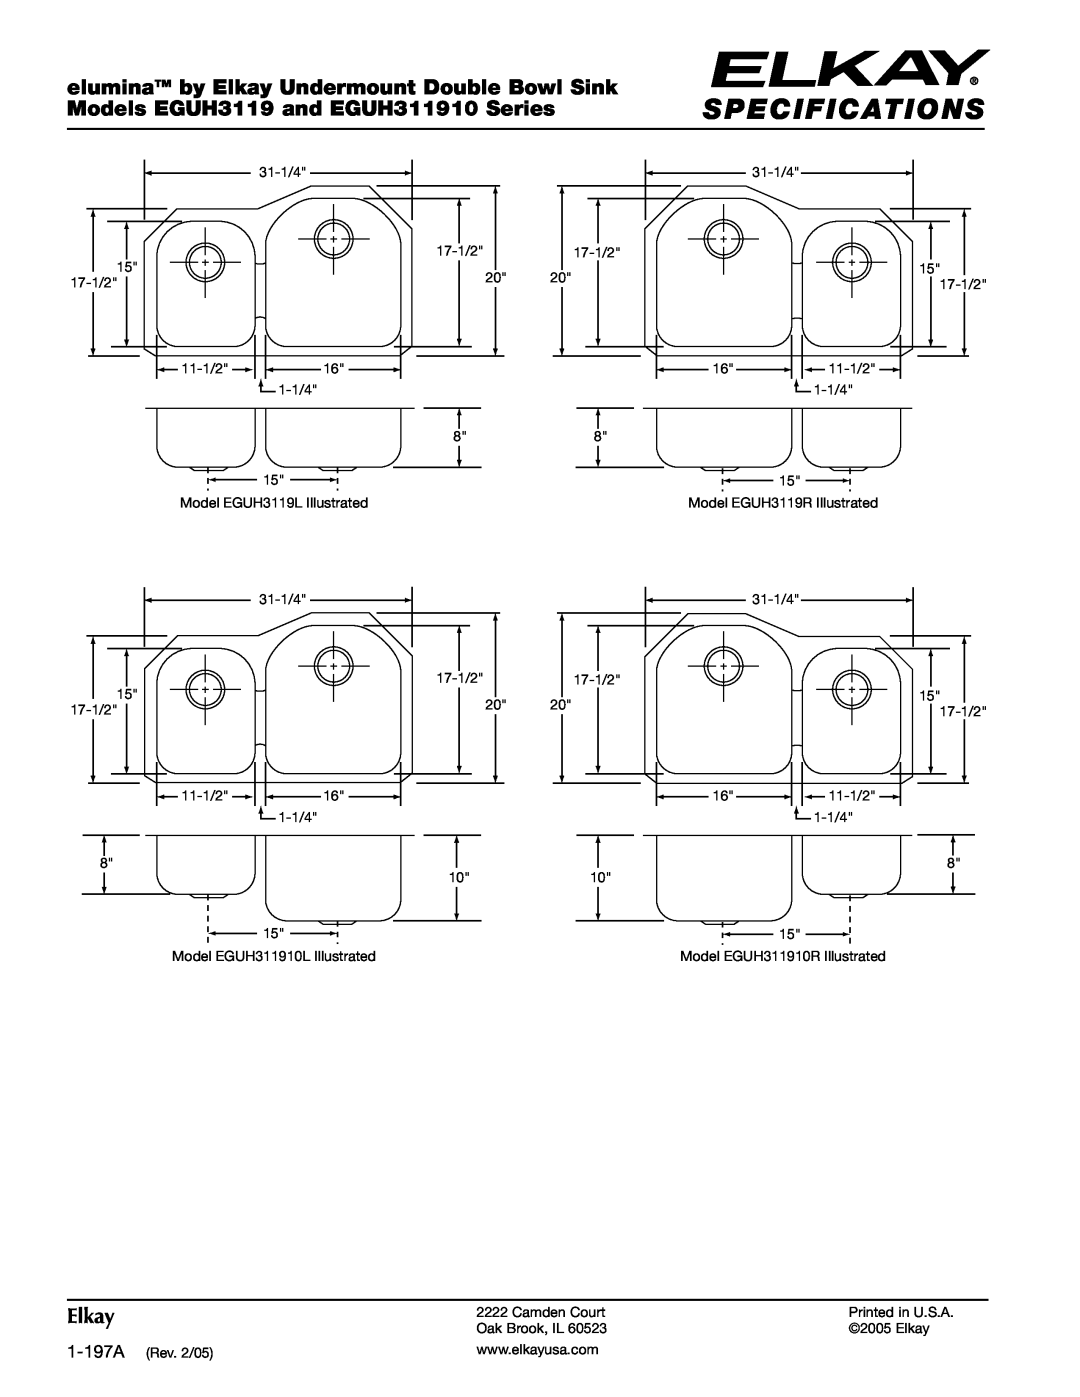 Elkay Specifications, eluminaTM by Elkay Undermount Double Bowl Sink, Models EGUH3119 and EGUH311910 Series 